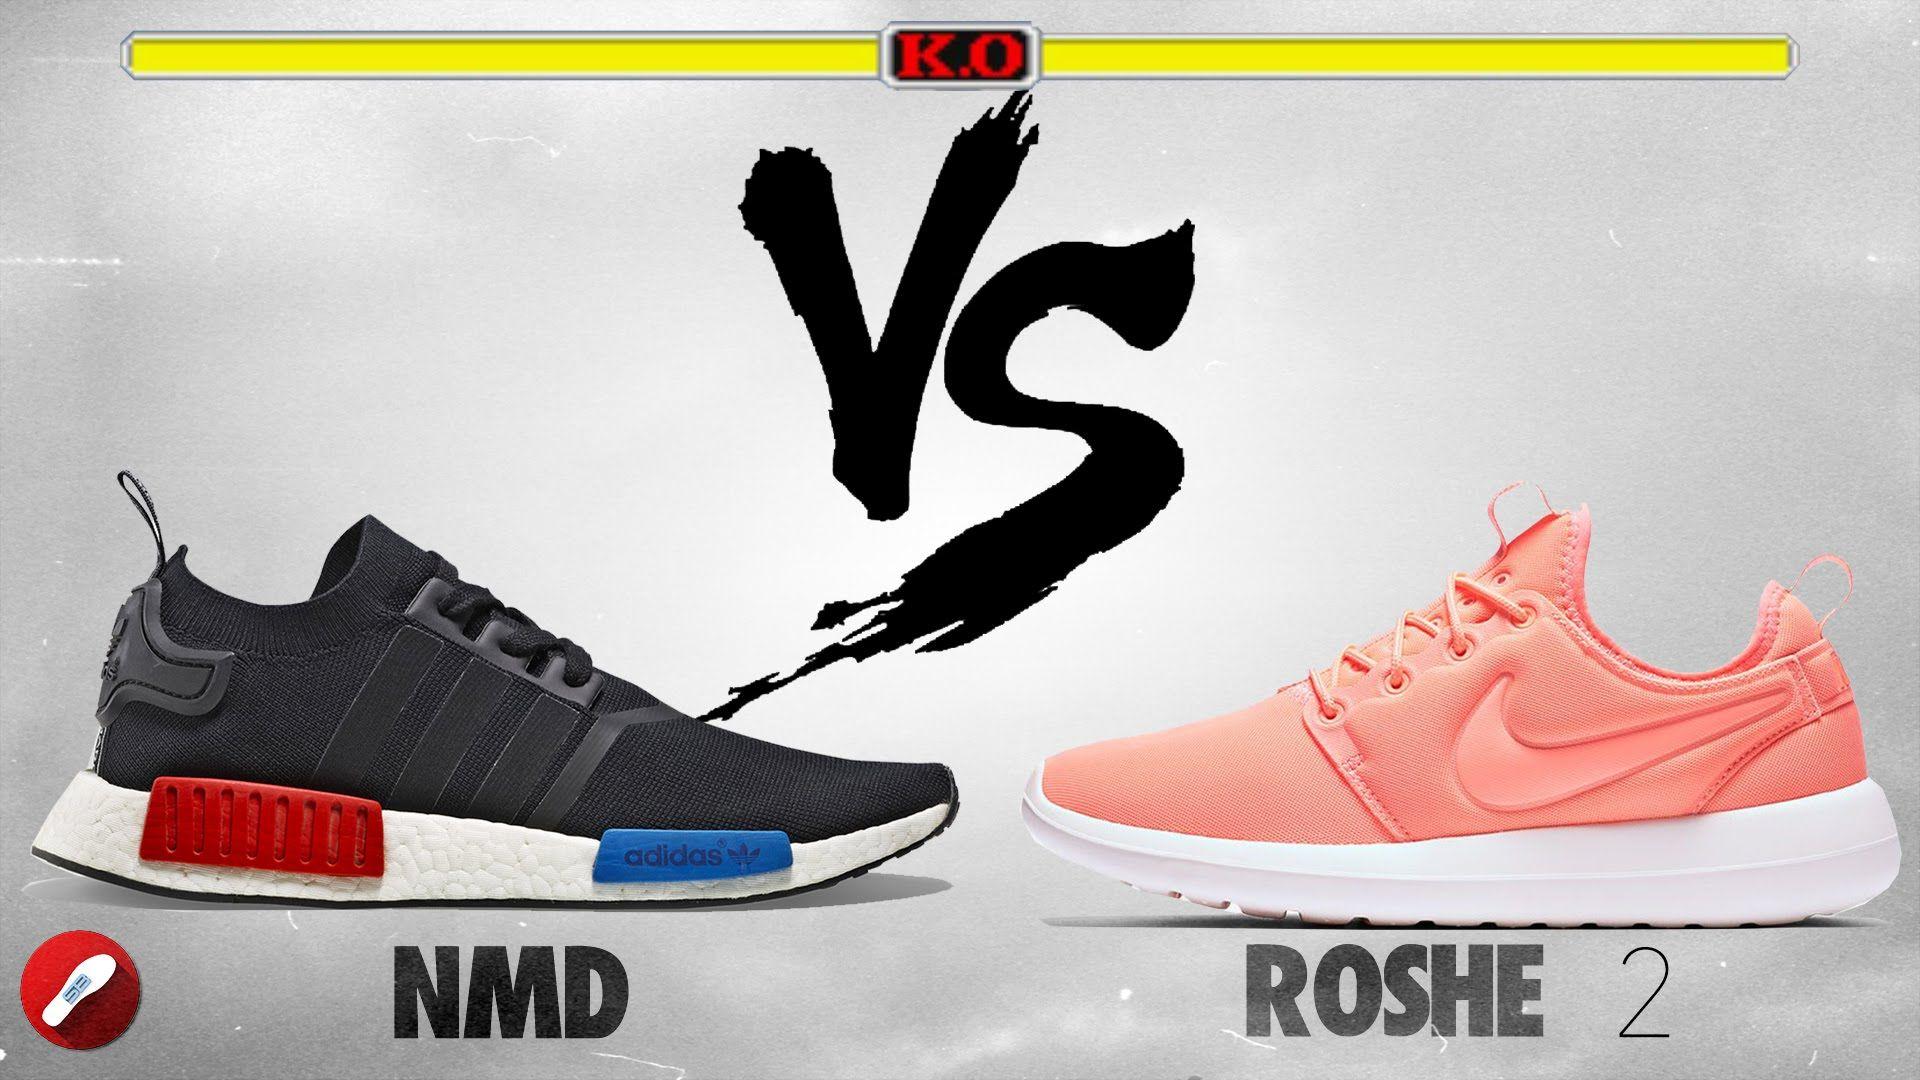 Adidas NMD vs Nike Roshe 2! Whats More Comfy?